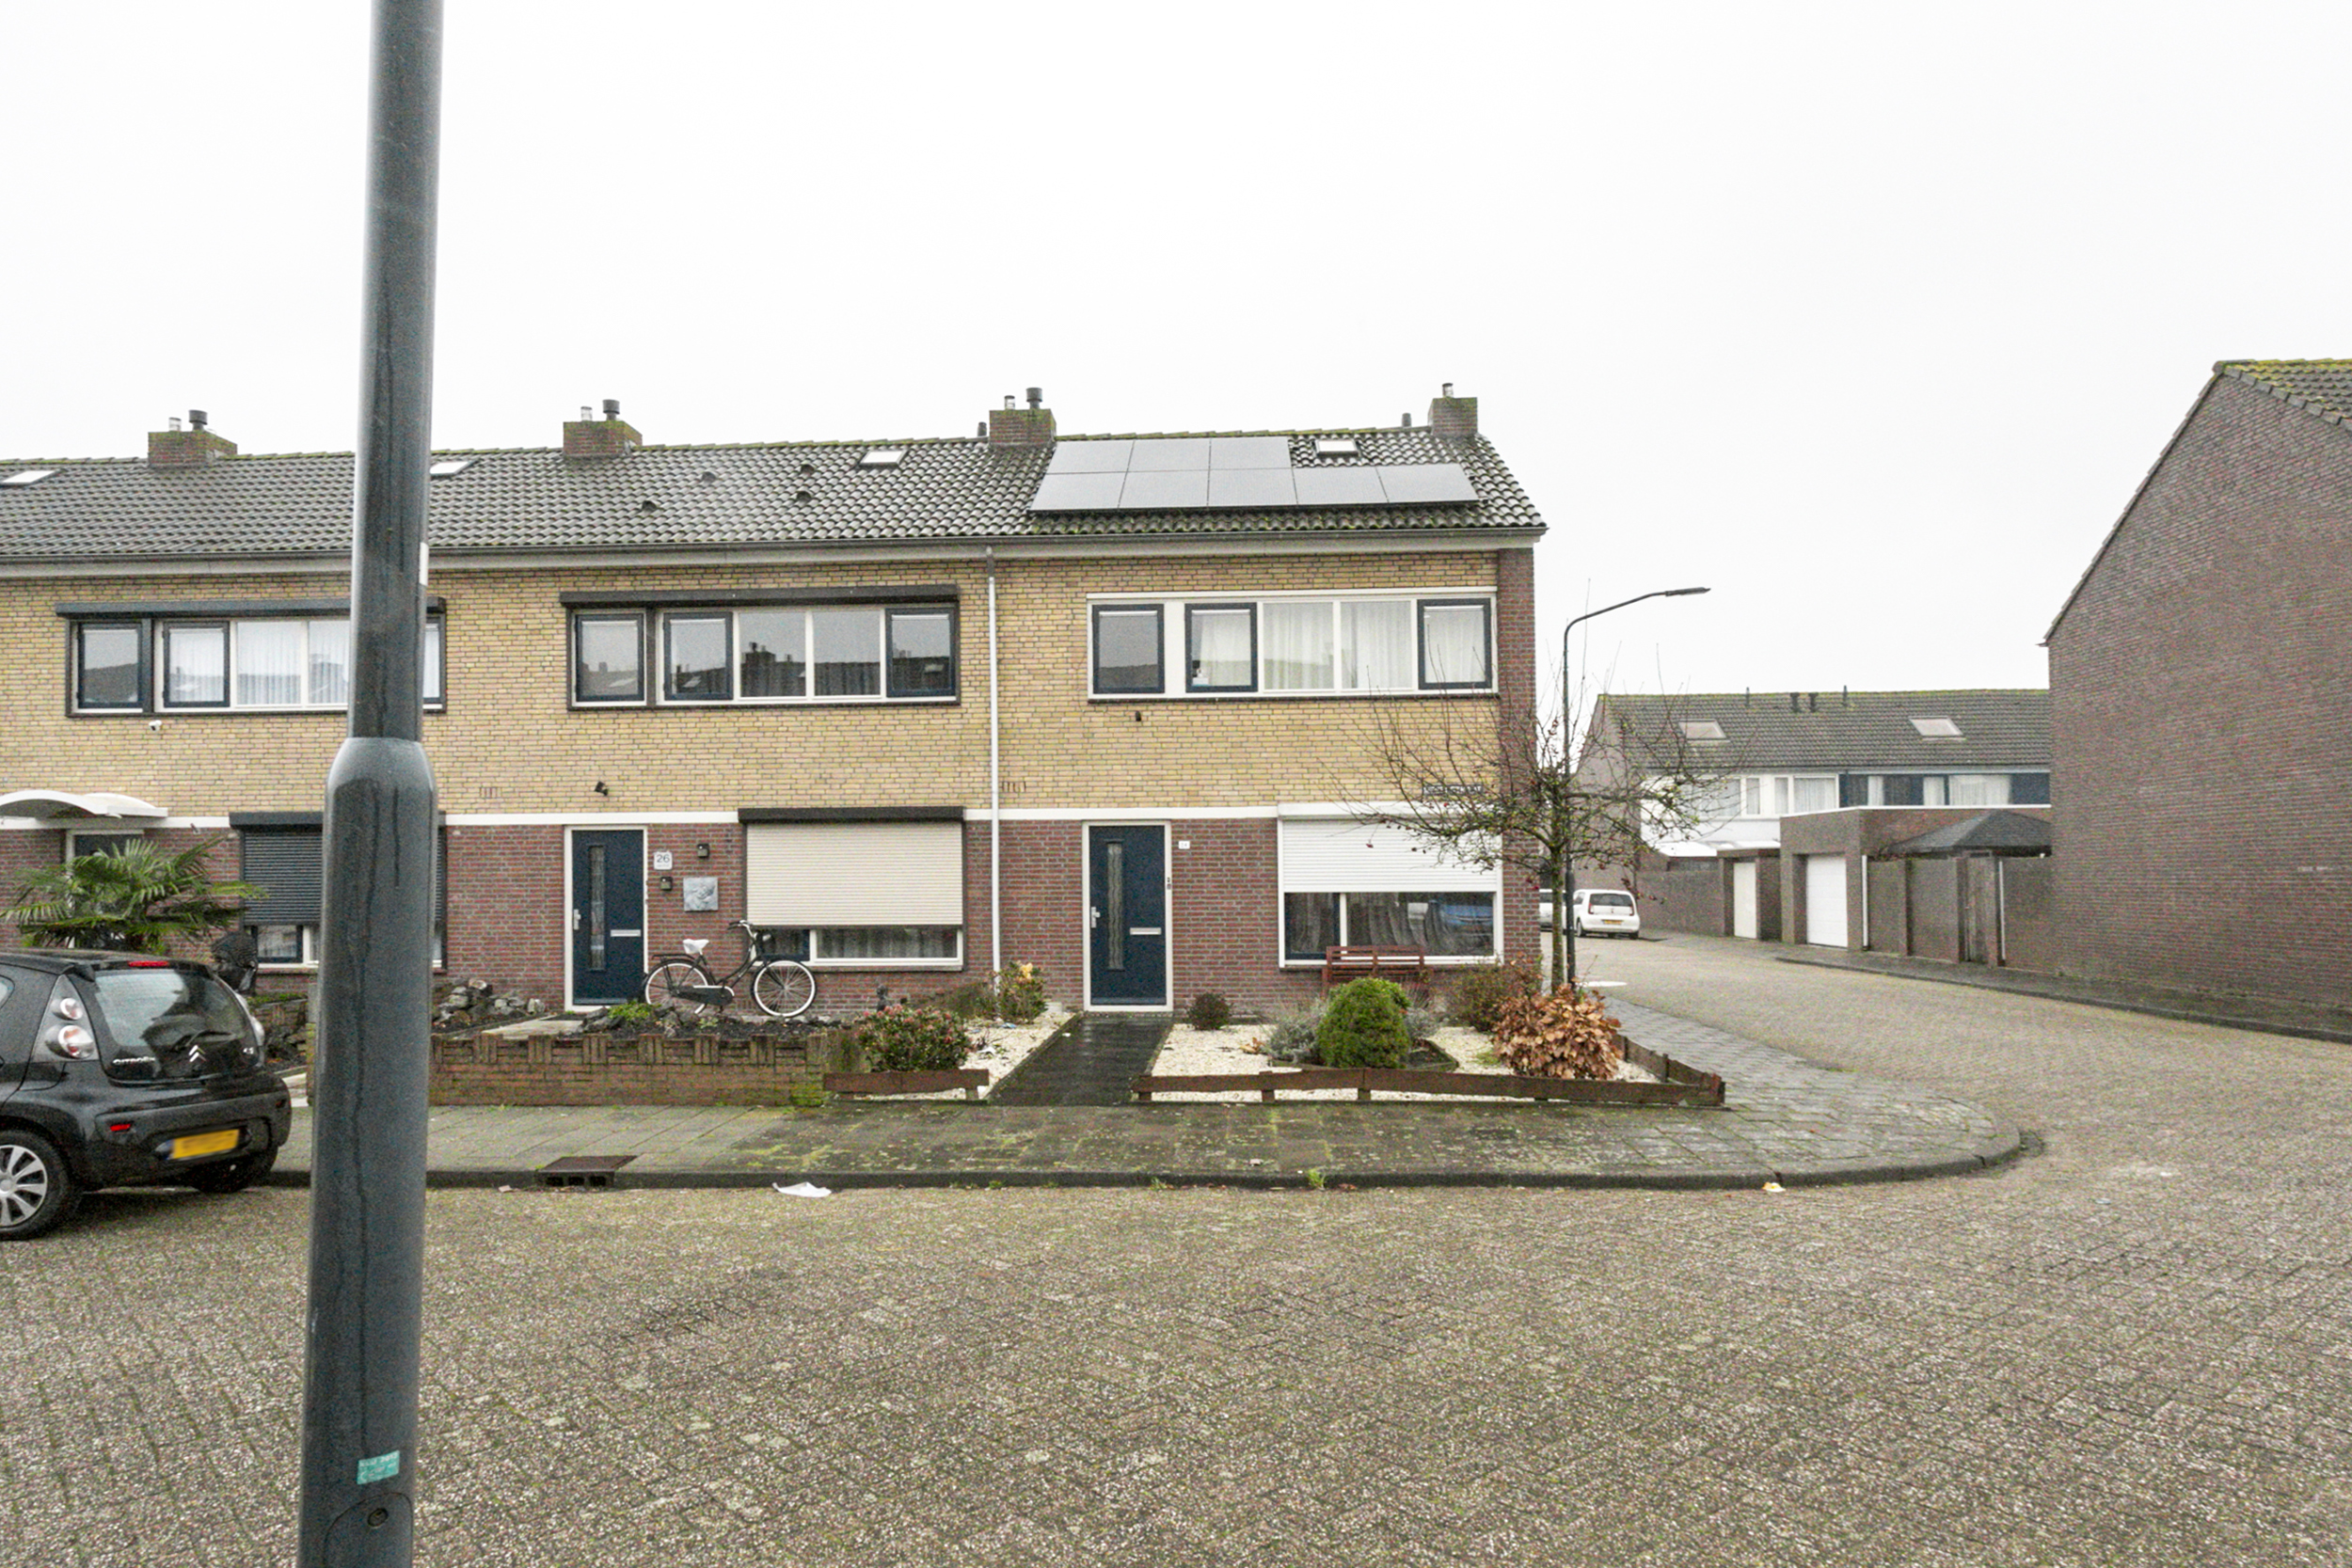 Merelstraat 24, 4901 BH Oosterhout, Nederland